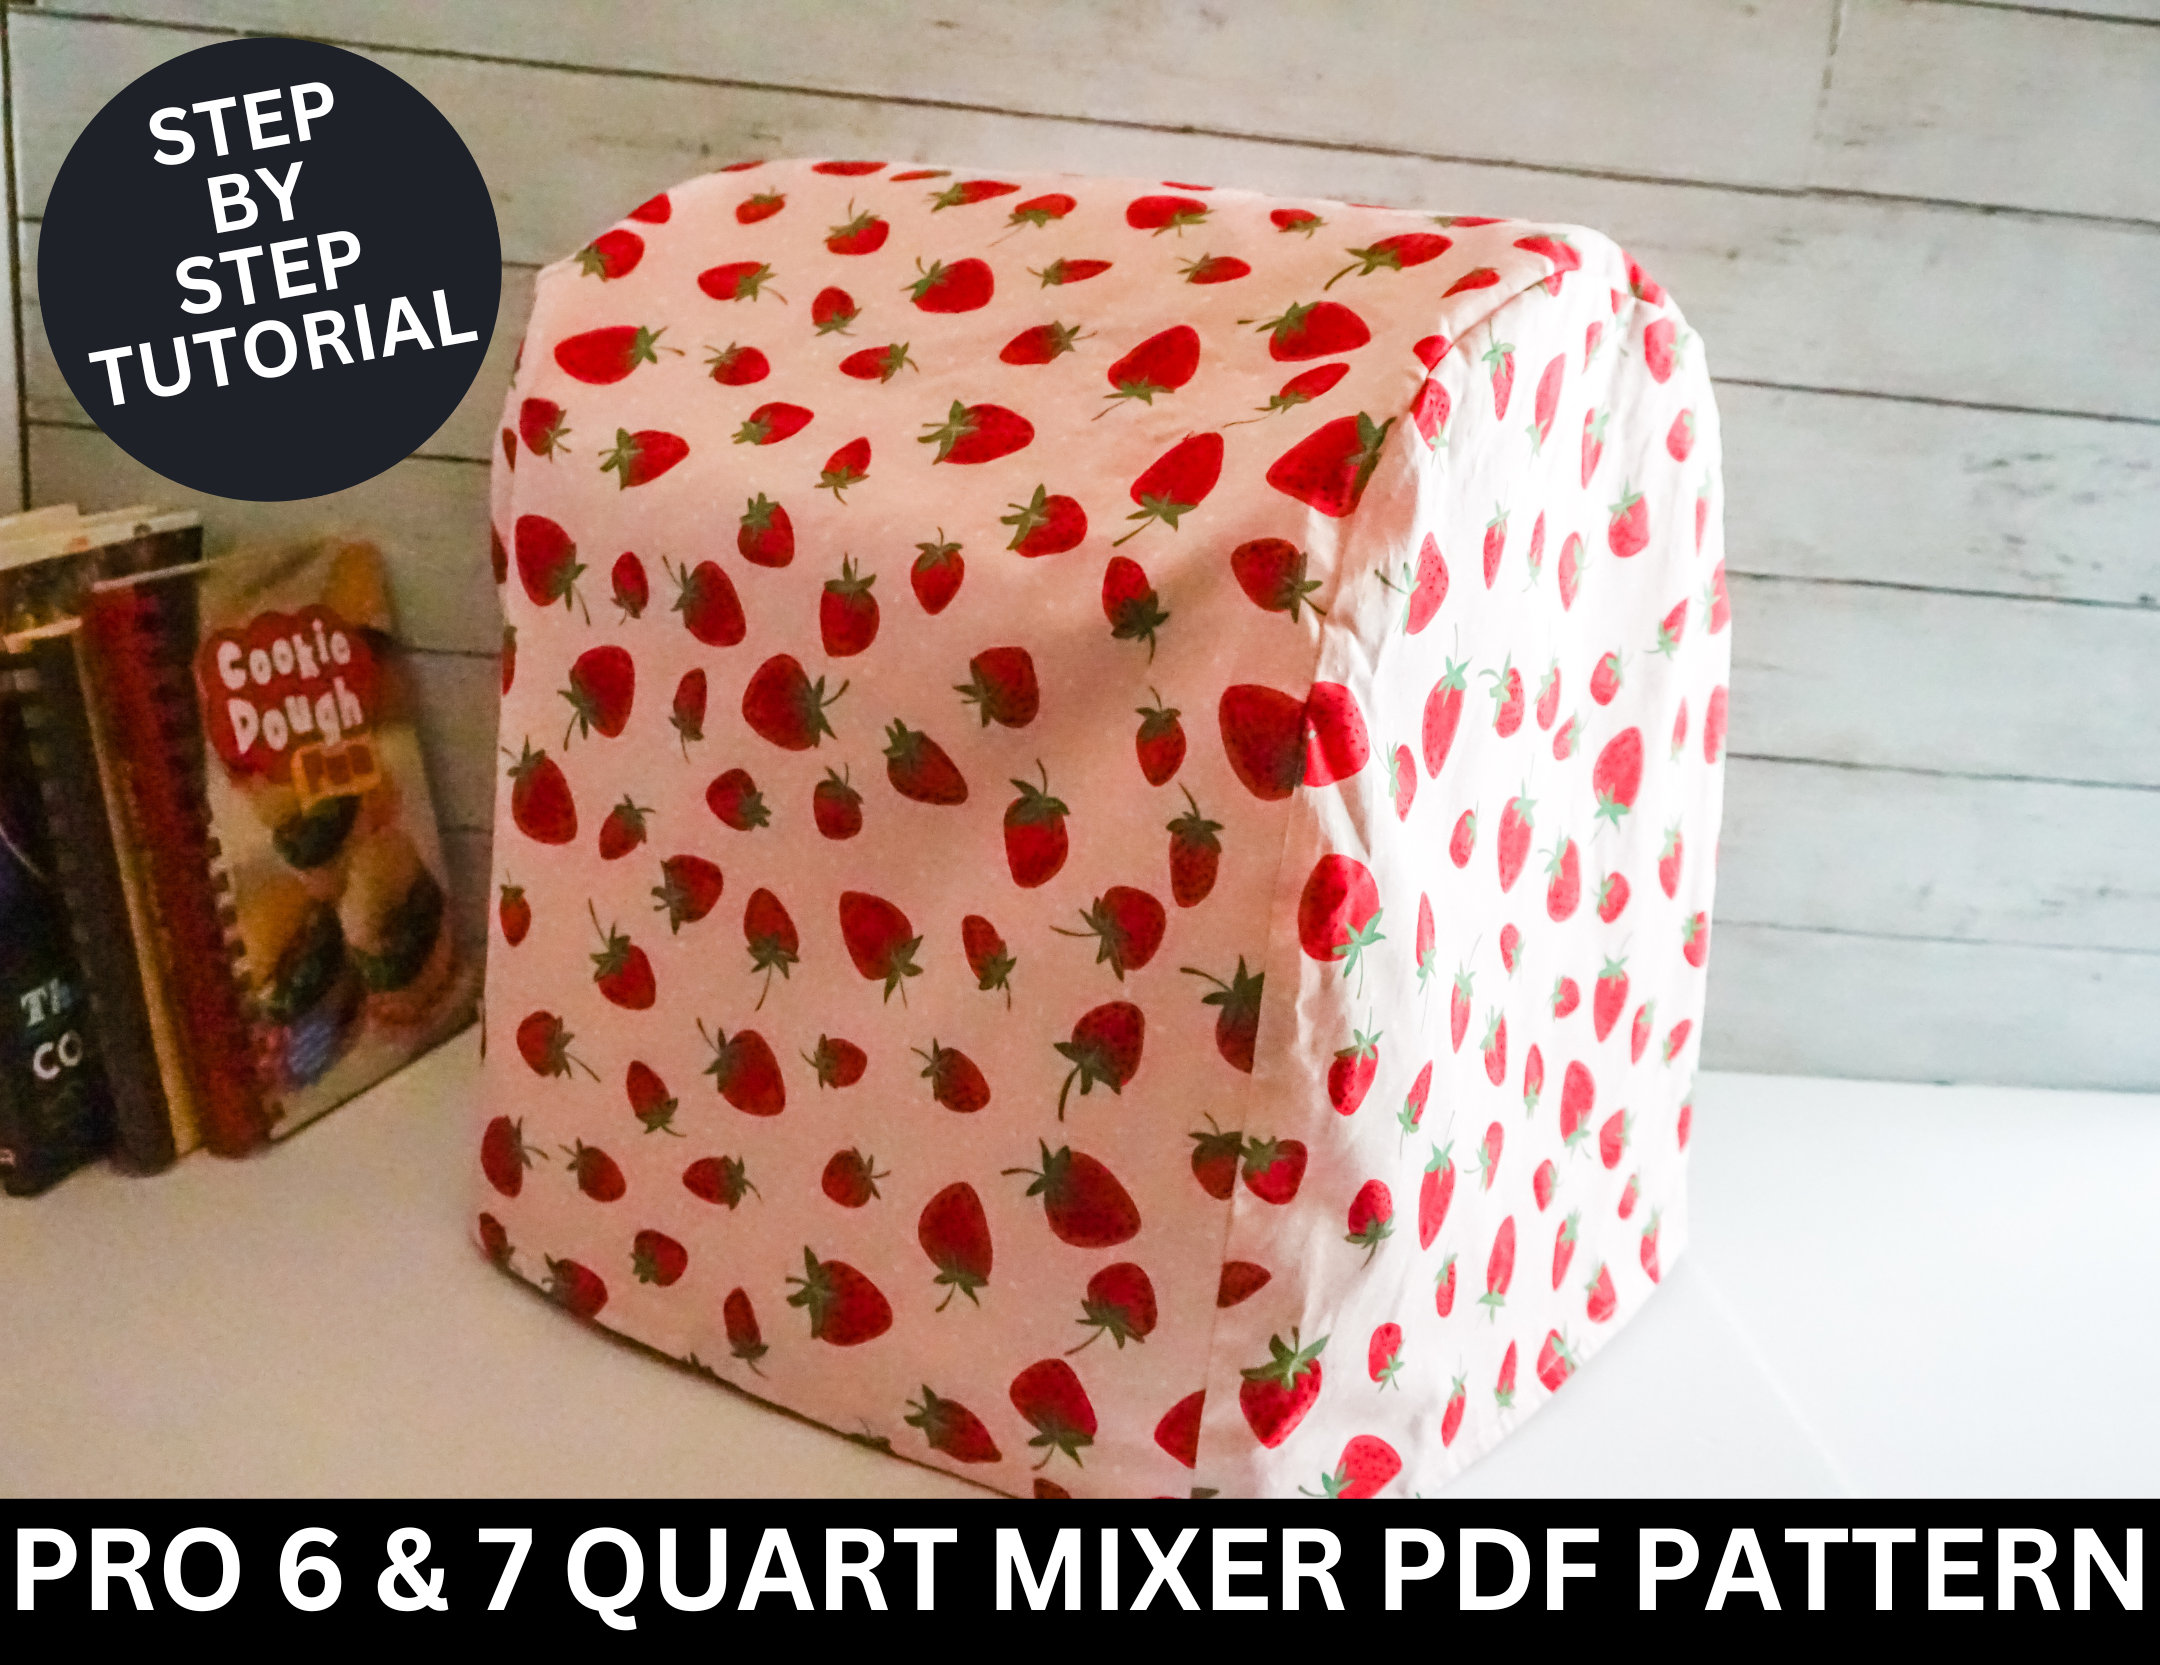 XL Strawberries Fabric Bowl Cover Kitchenaid Mixer Bowl 